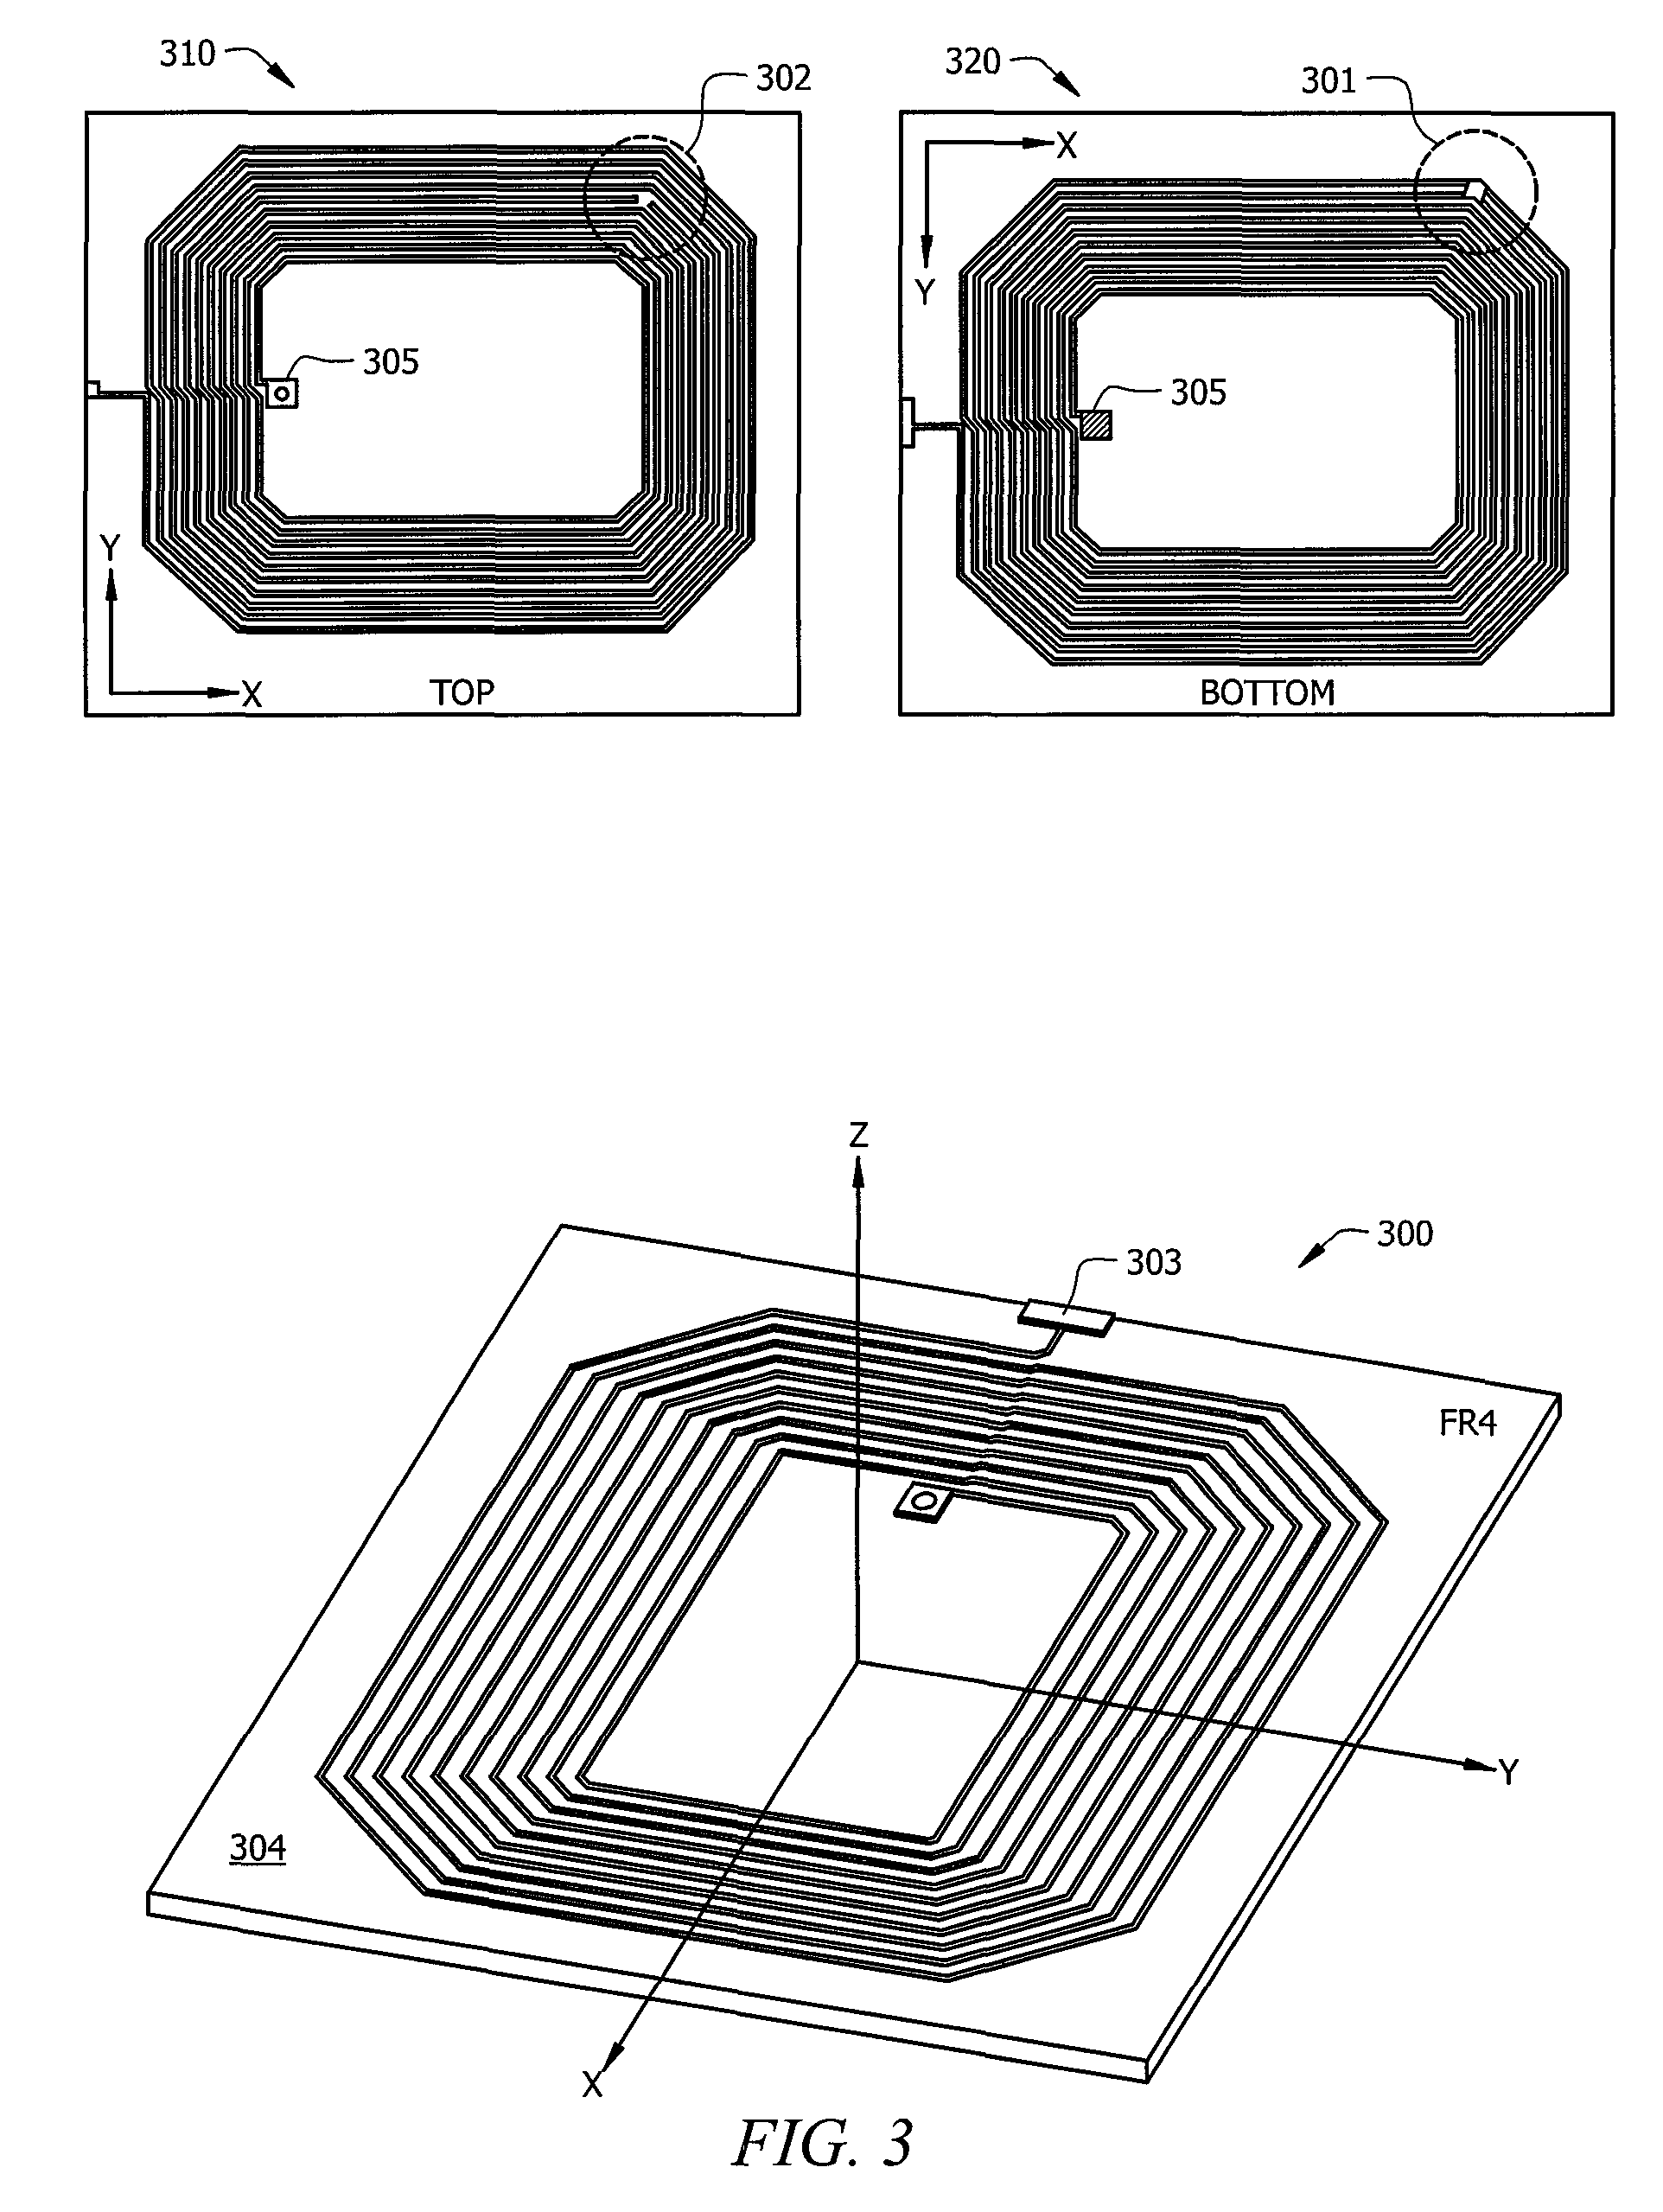 Miniature and multi-band RF coil design